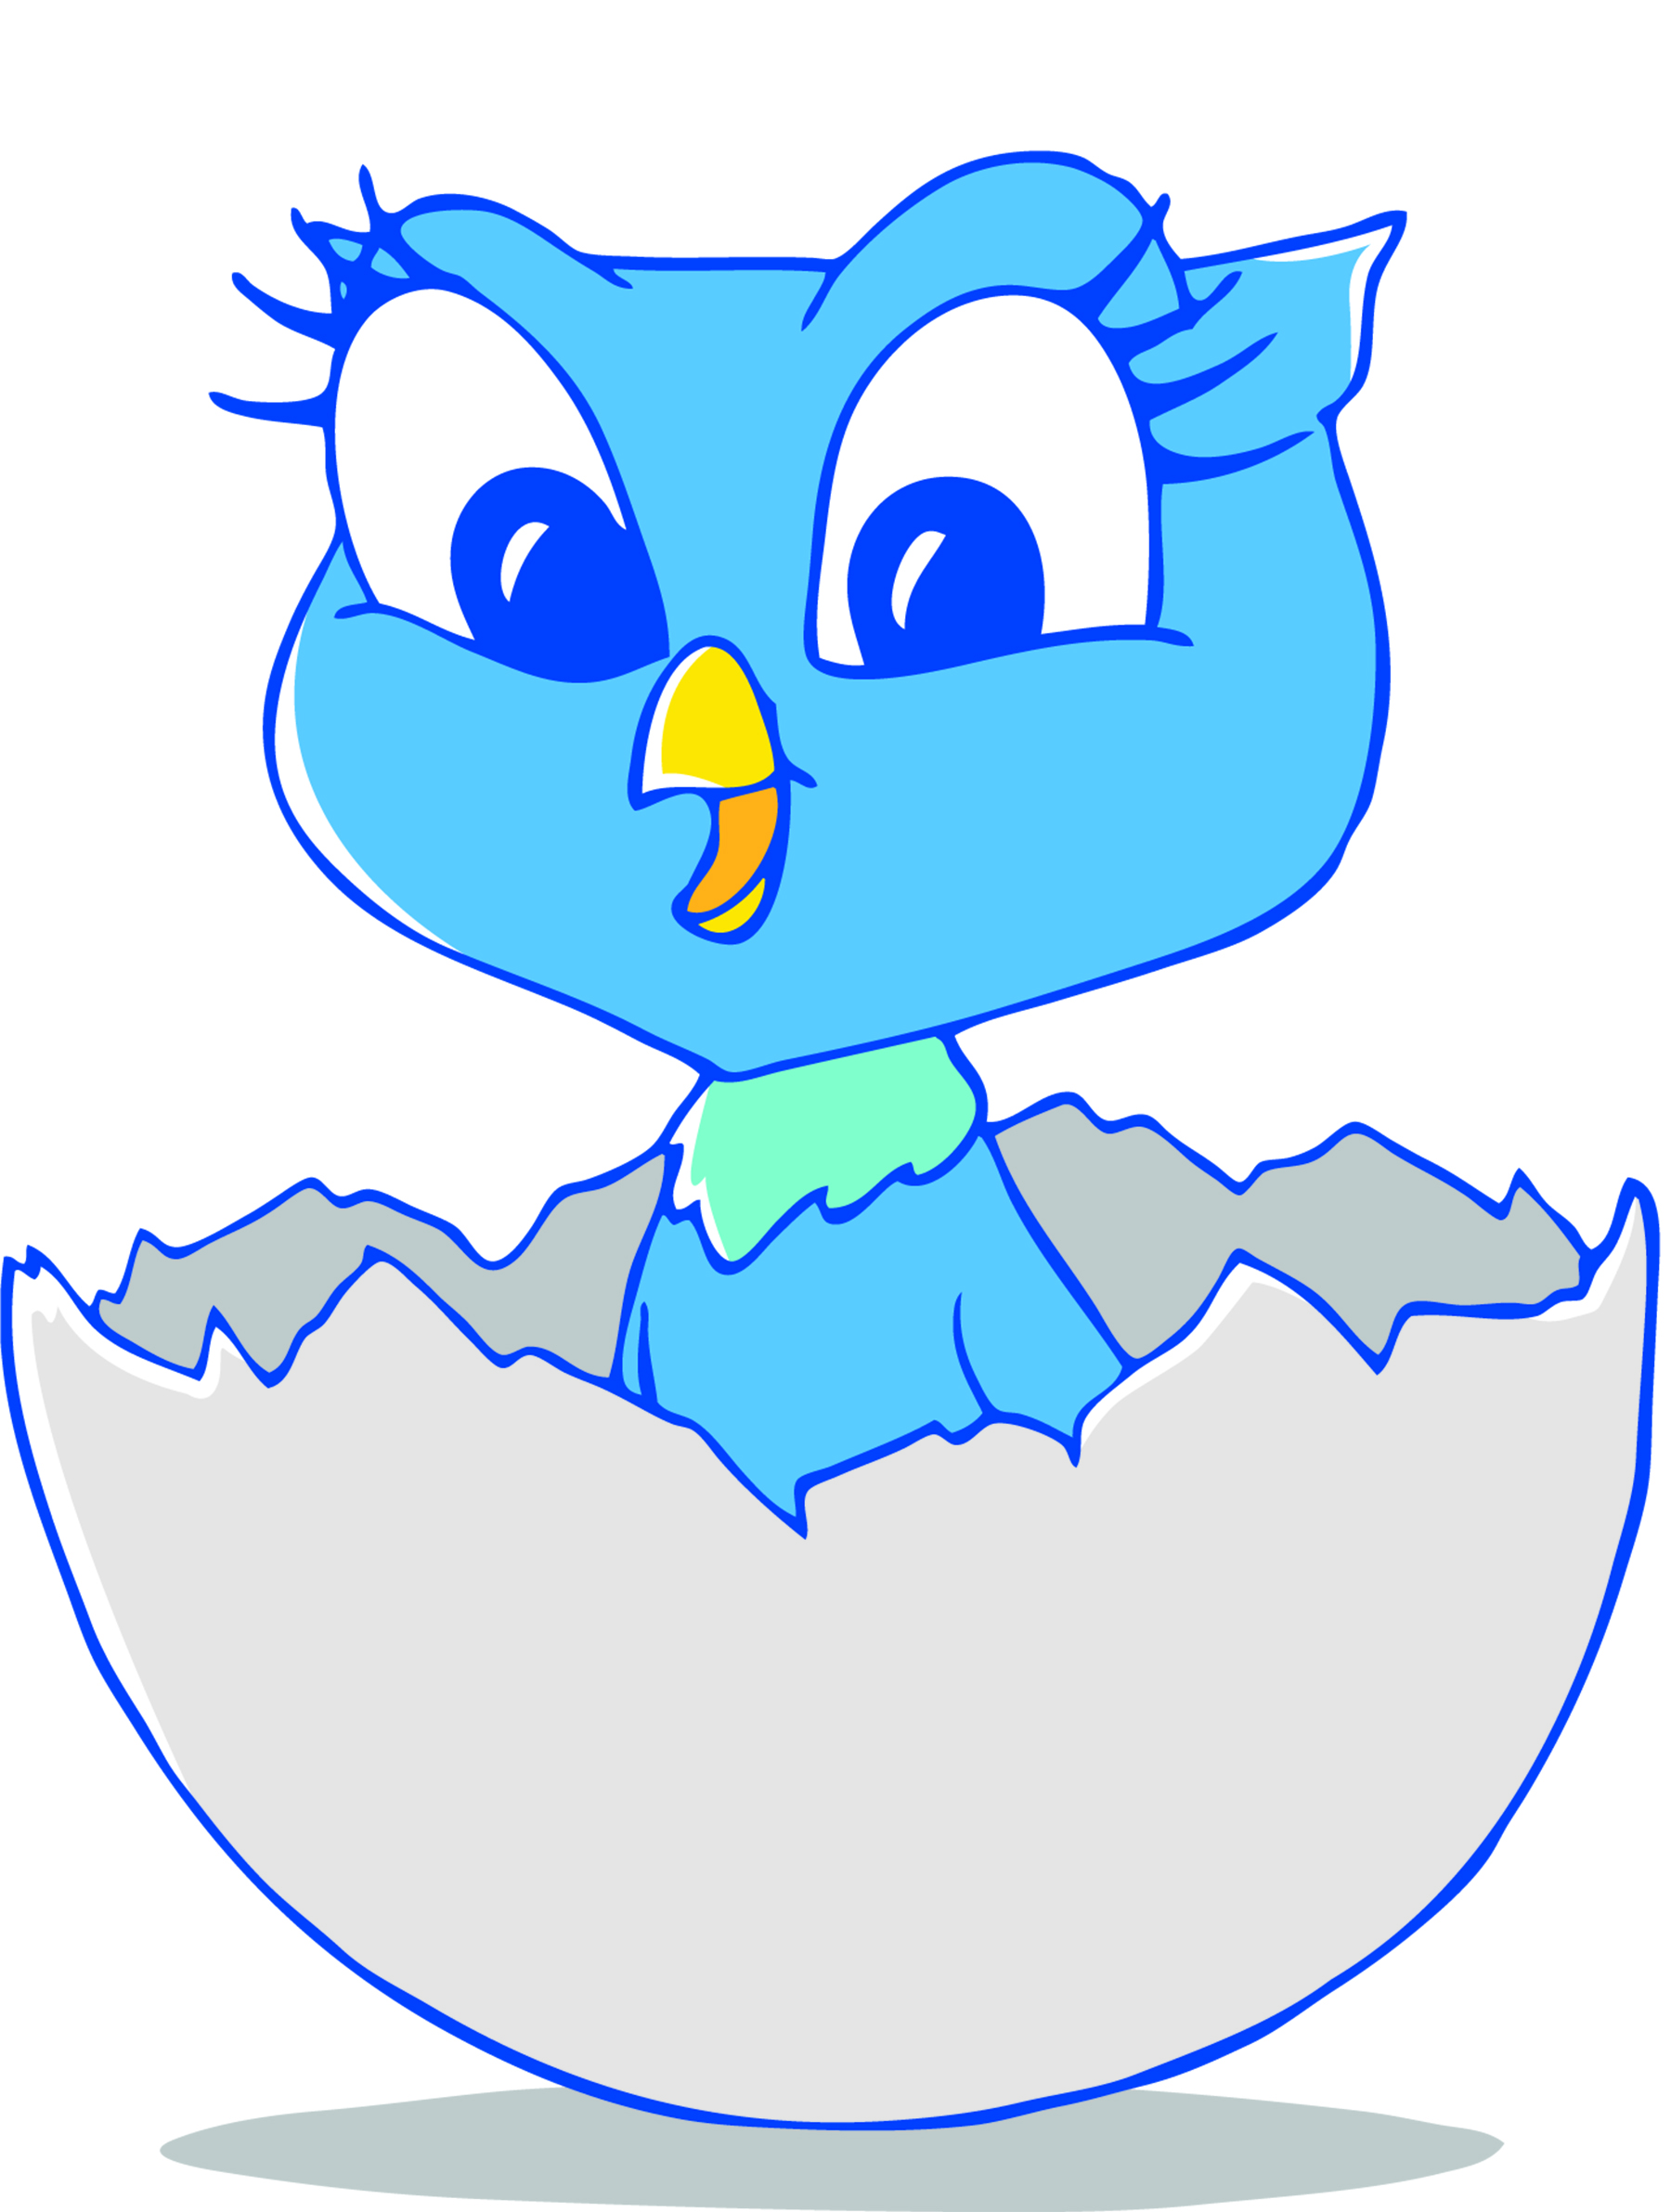 Blue bird cartoon sitting in egg shell